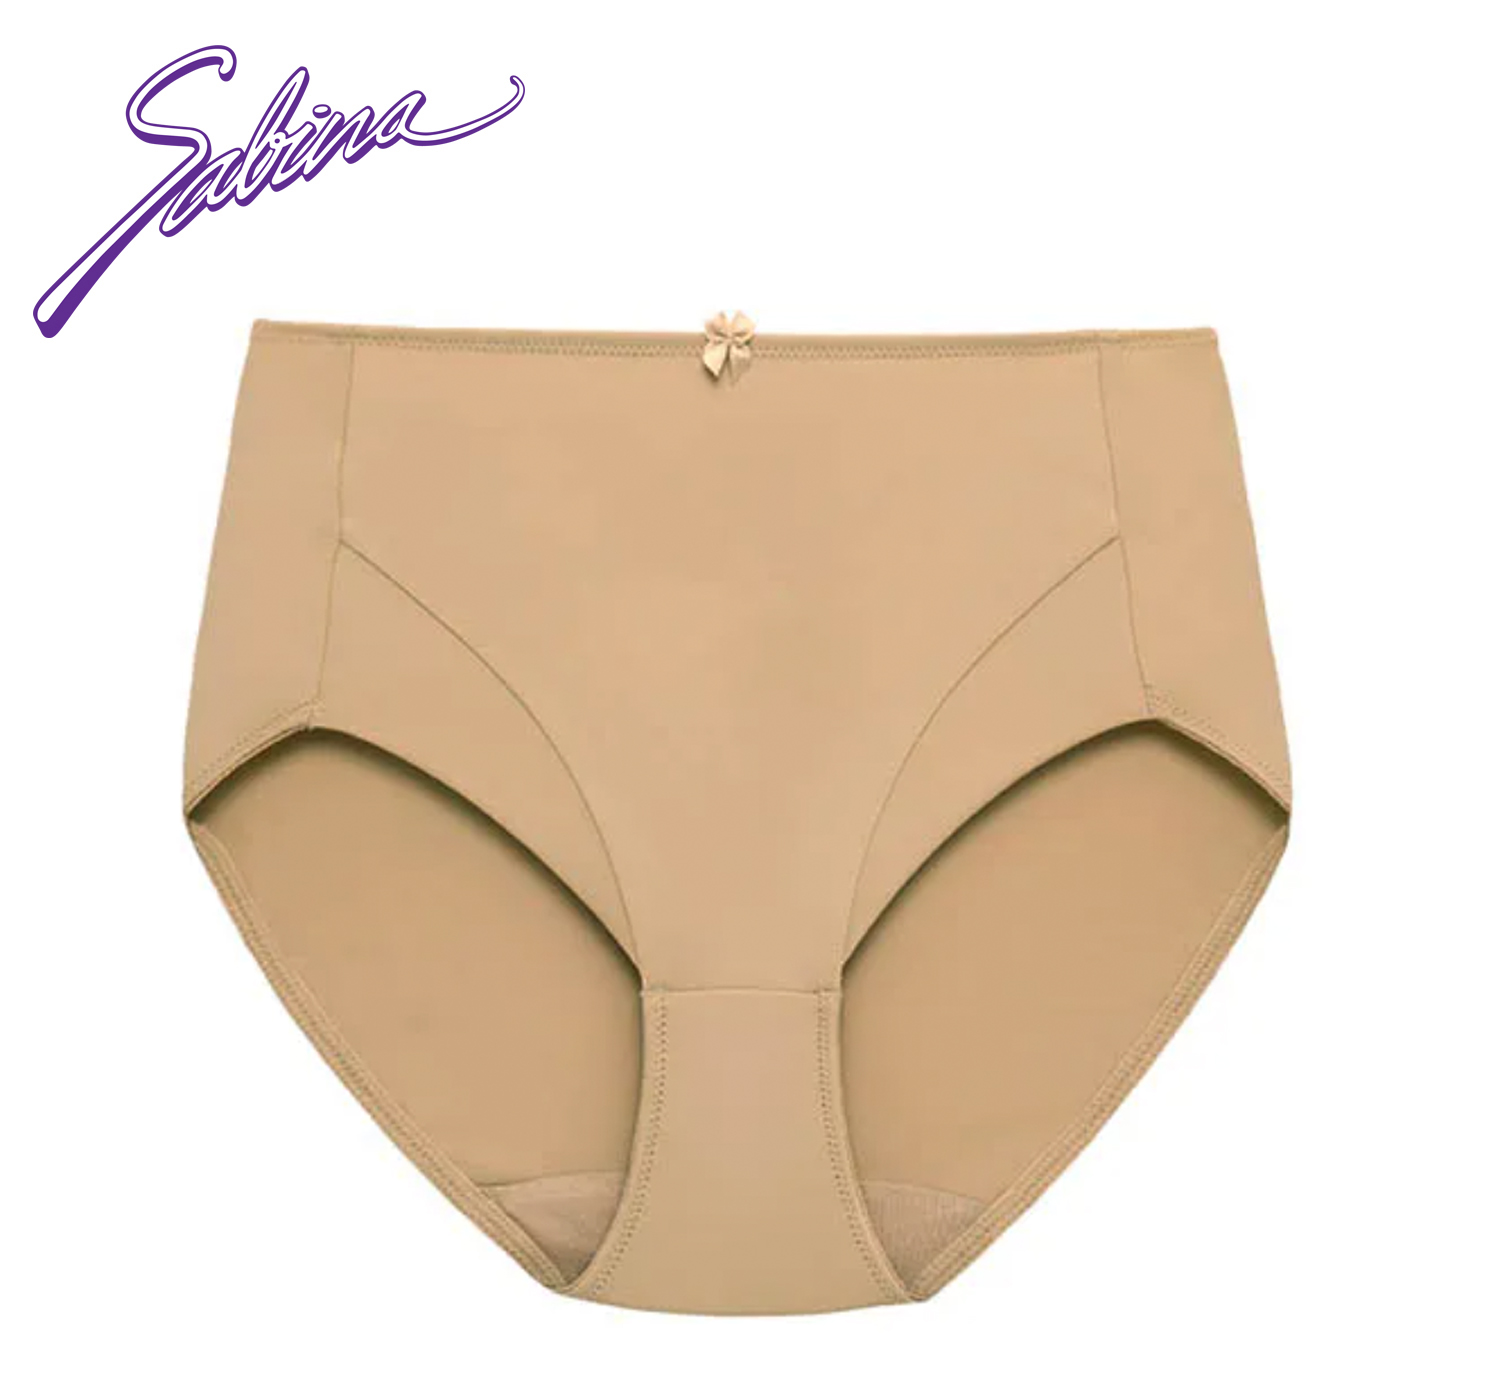 Sabina Jumbo Panty Soft Collection Collection Style no. SUXK3508 Tan